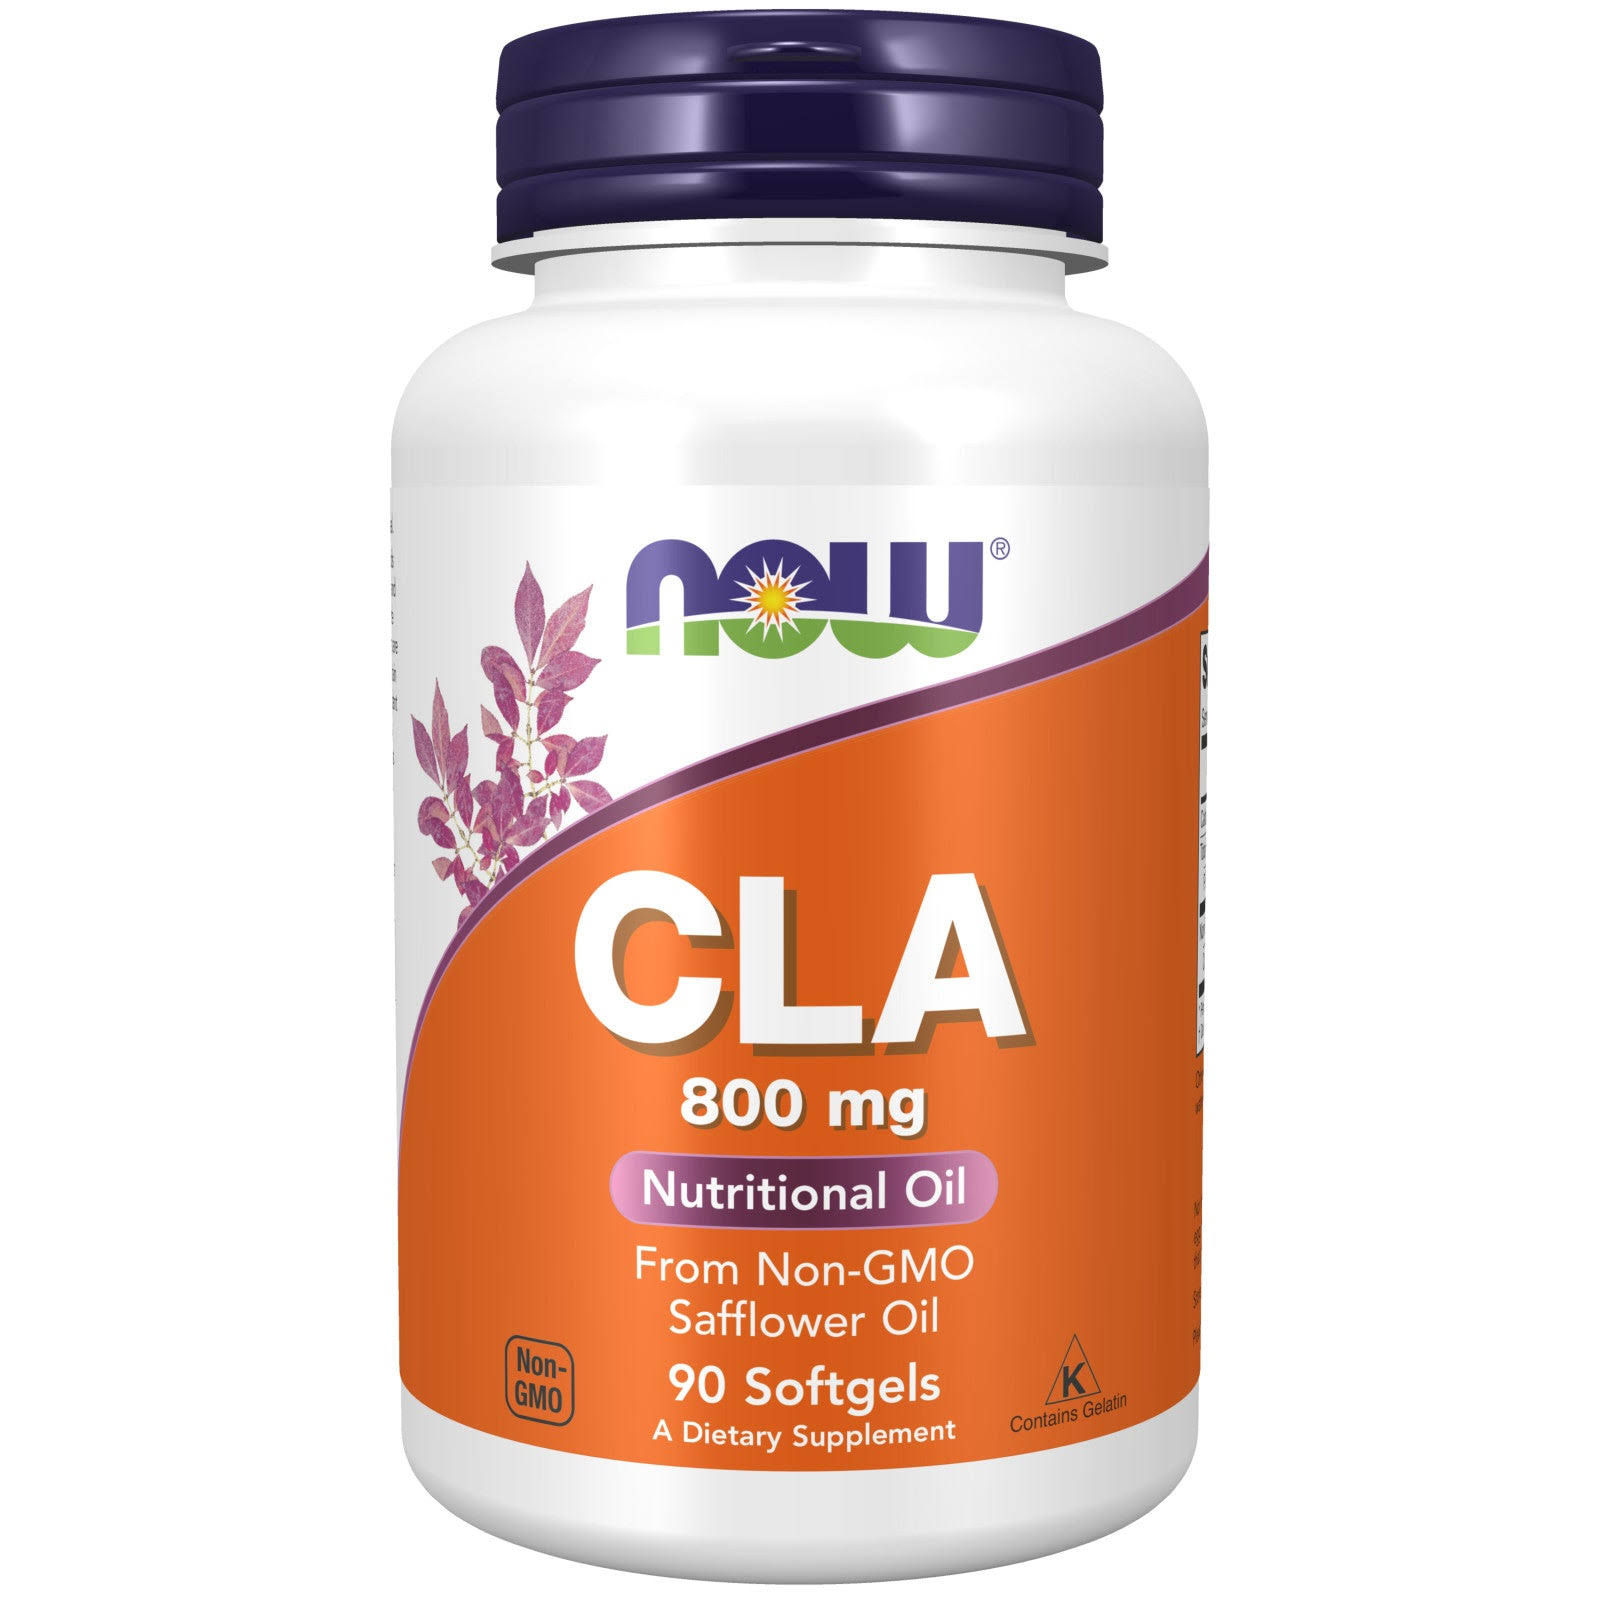 Now CLA Food Supplement - 90 Softgels